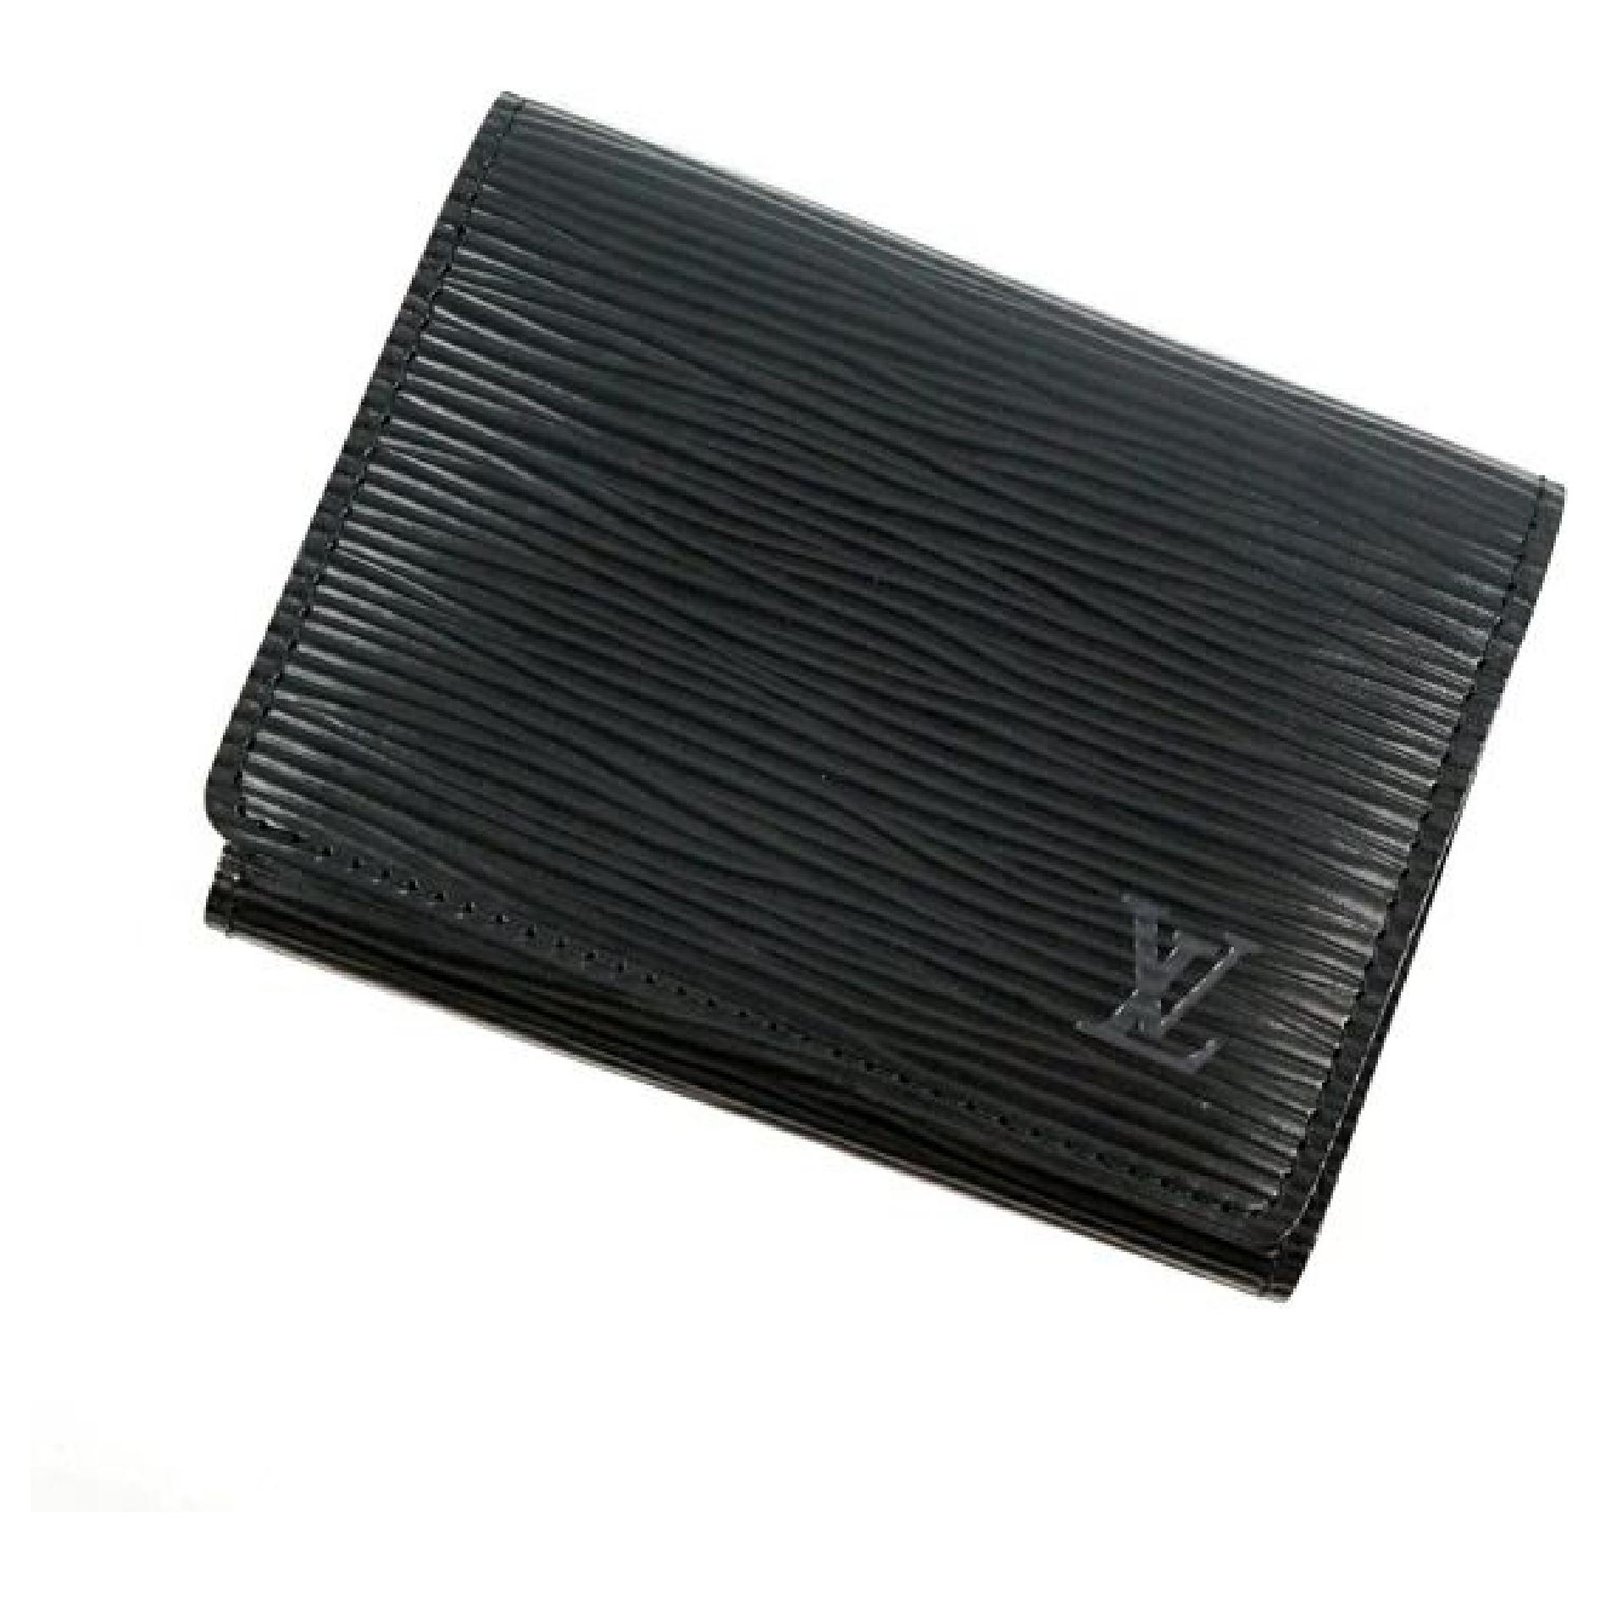 Louis Vuitton M56582 Business card holder card case leather black